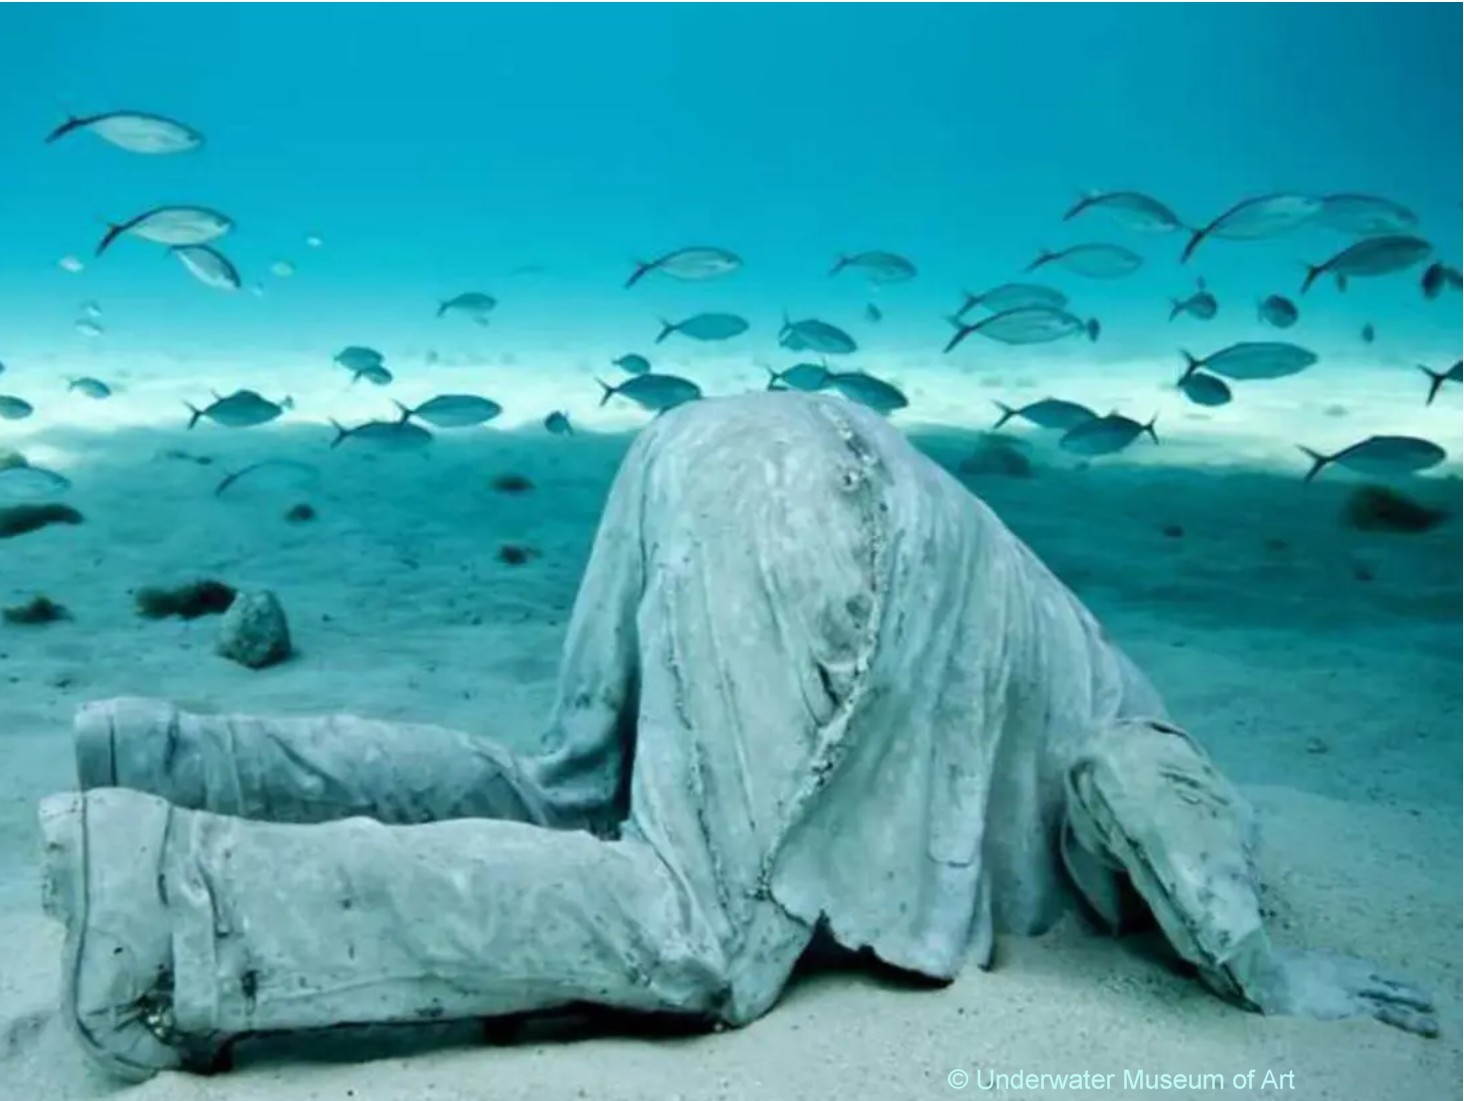 underwatermuseum of art: head in the sand